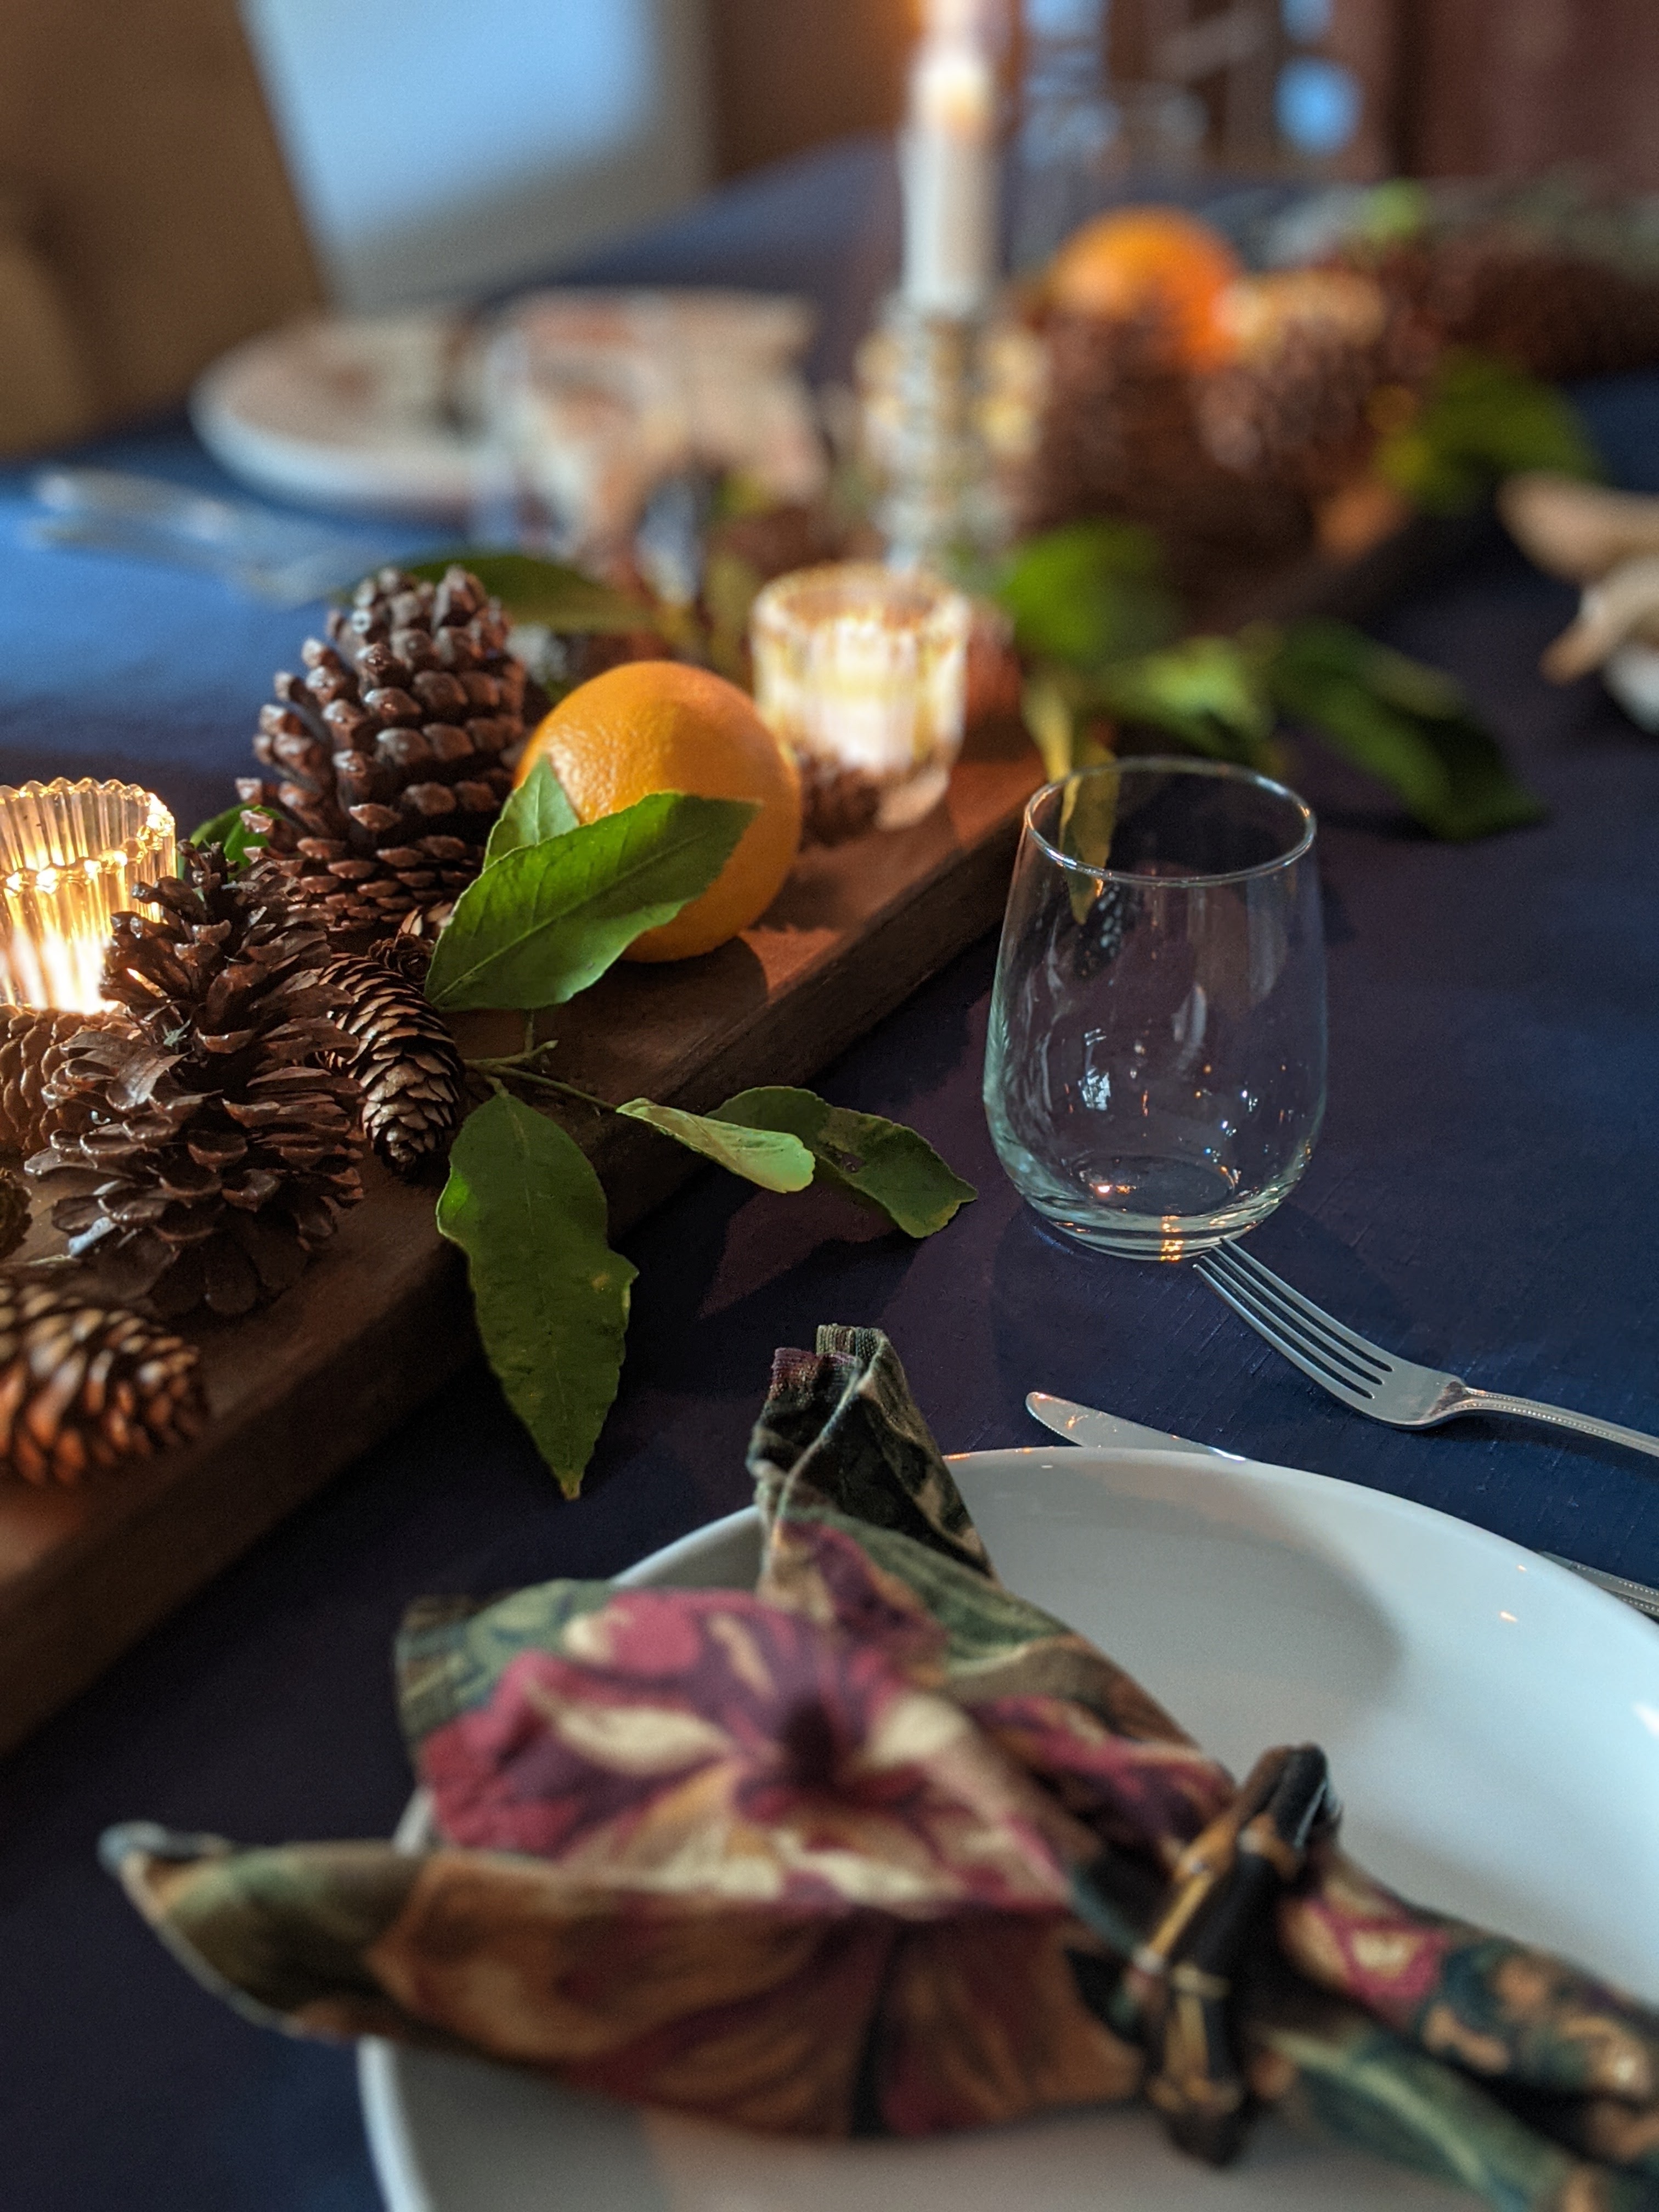 CAD Interiors dining table setting holidays fruit lemons pinecones pine garland candles natural